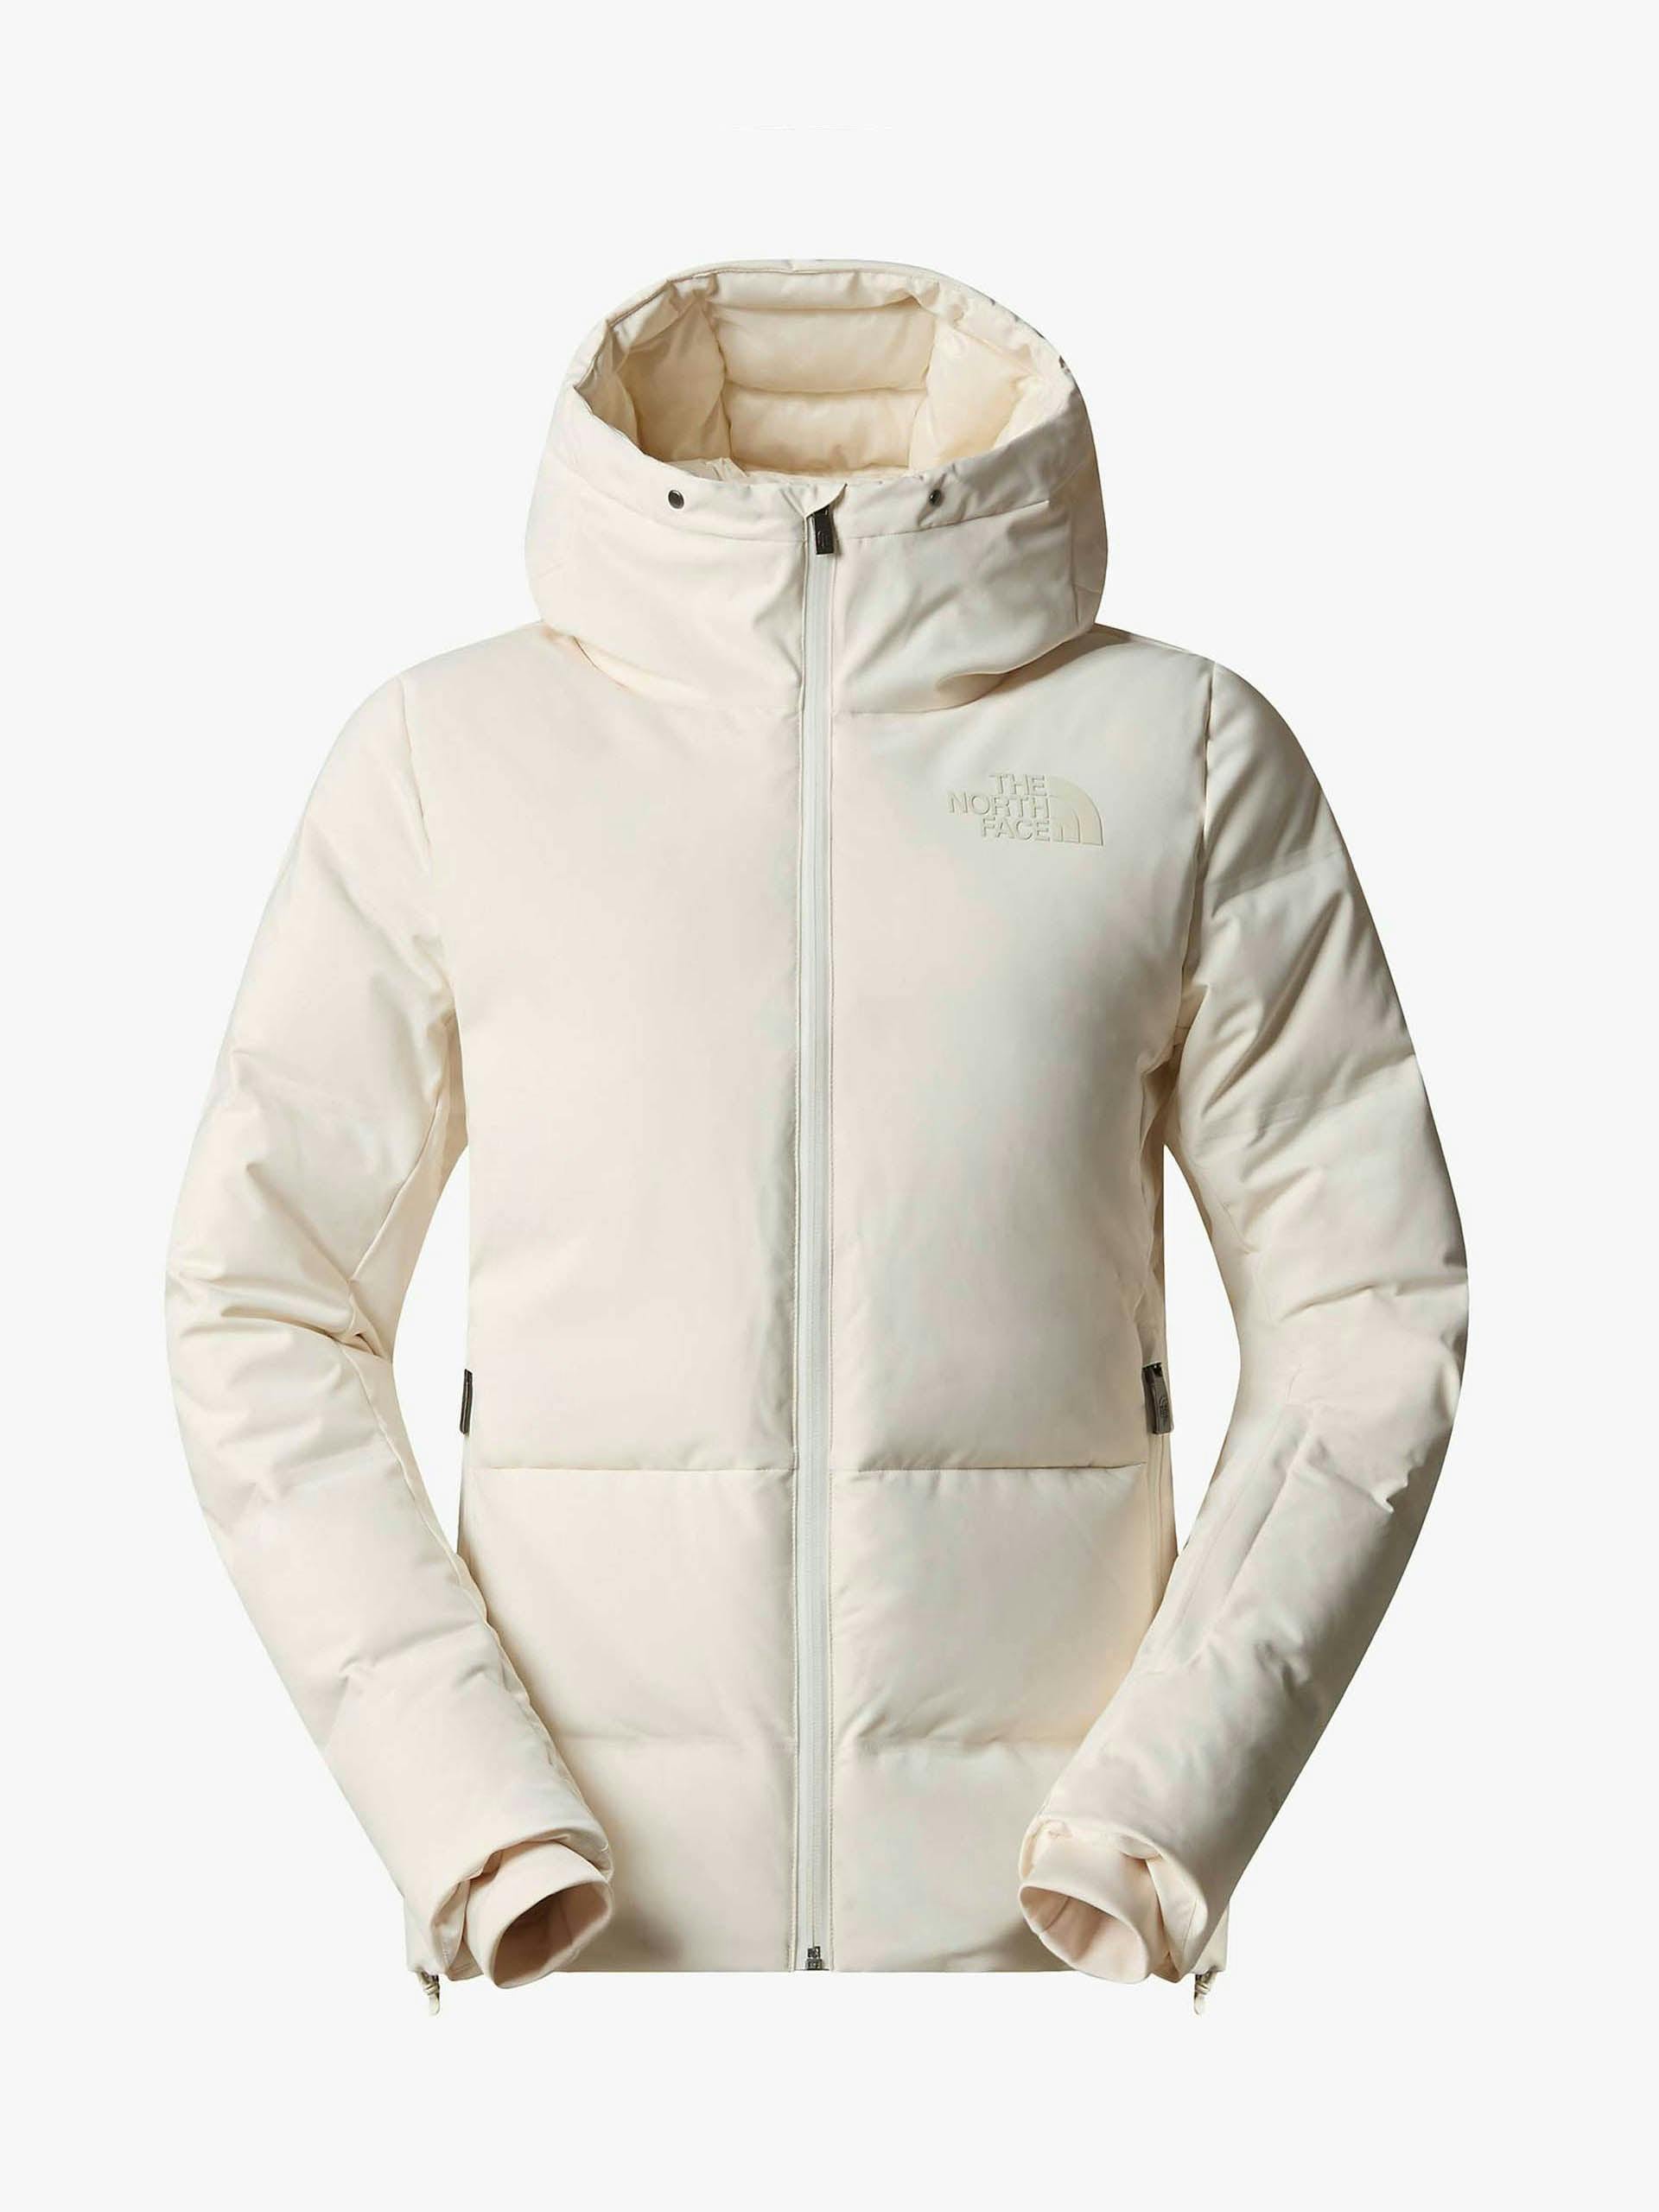 White hooded ski jacket